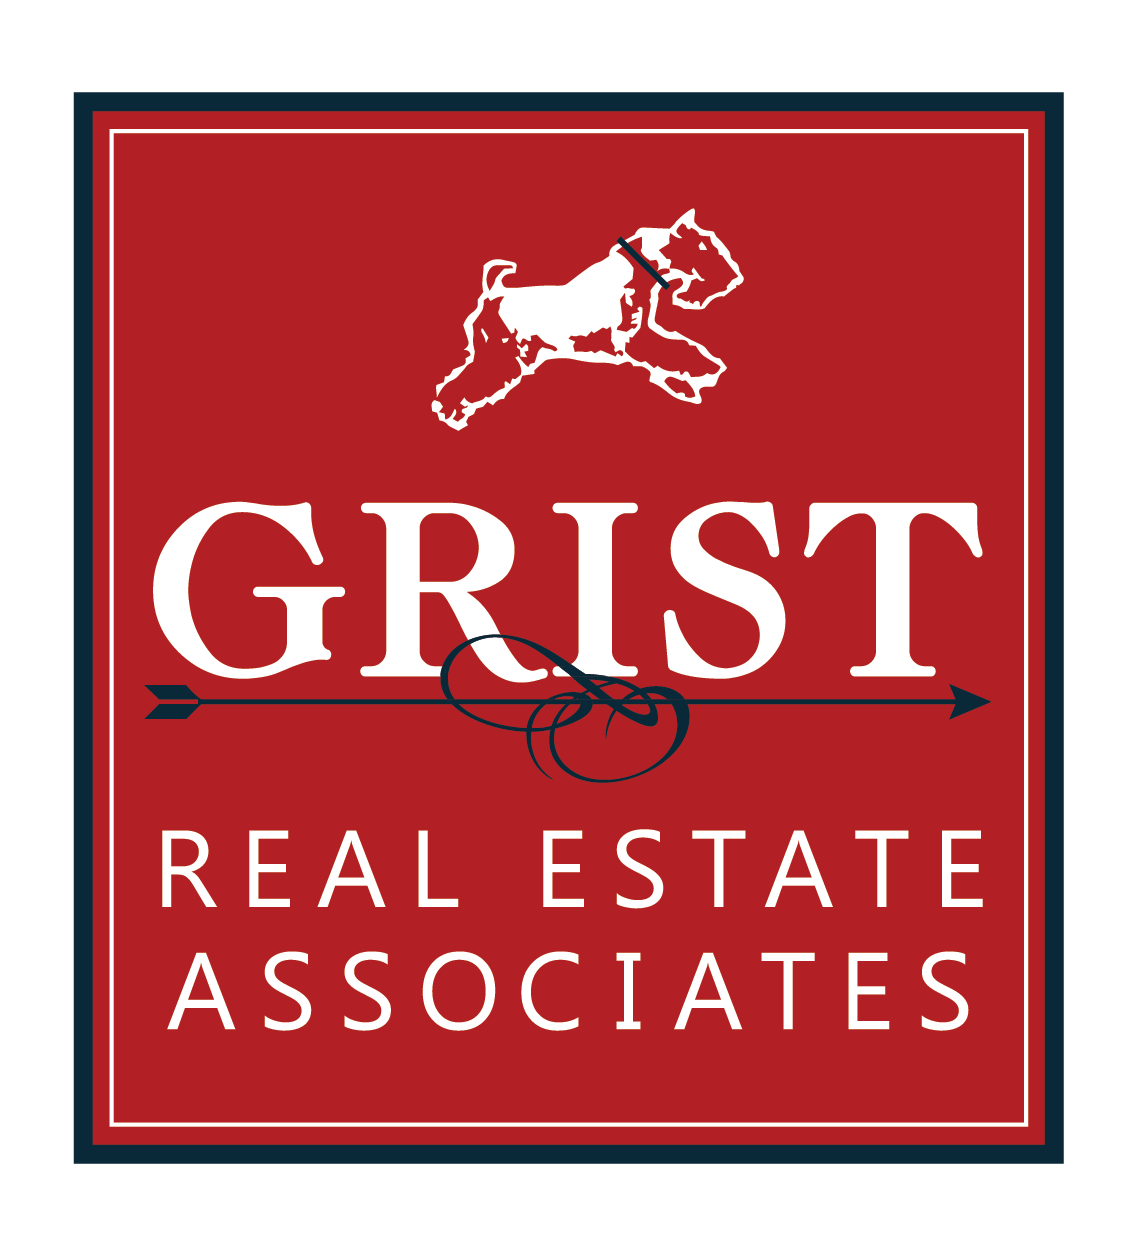 Grist Real Estate Associates